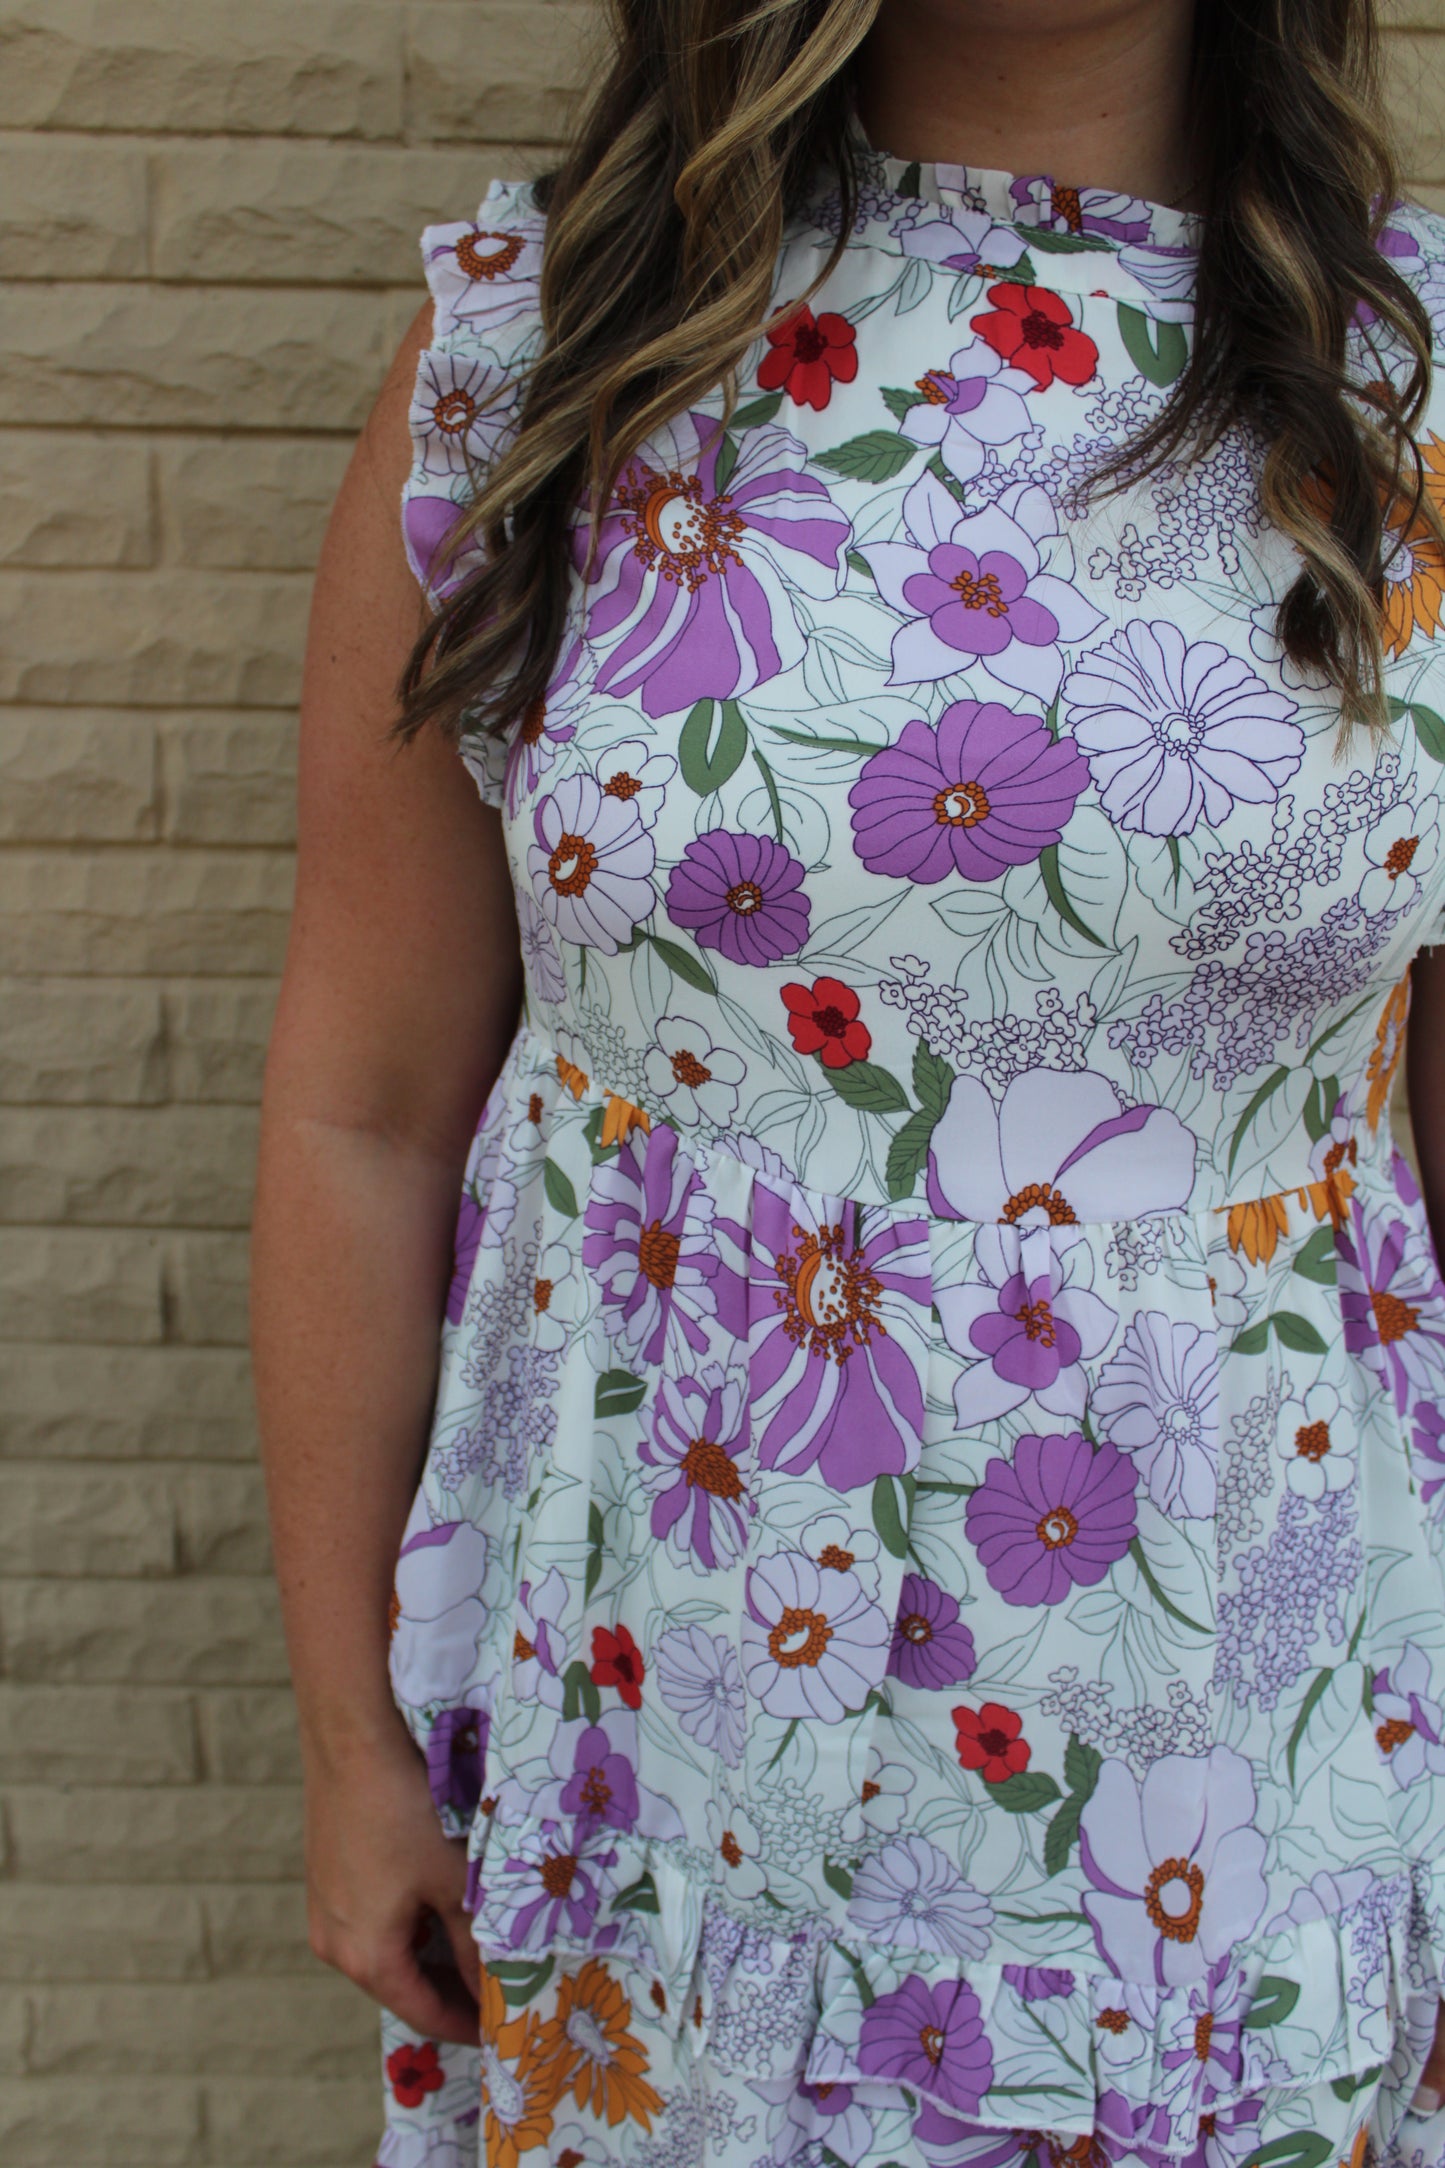 Purple Floral Print Tiered Dress